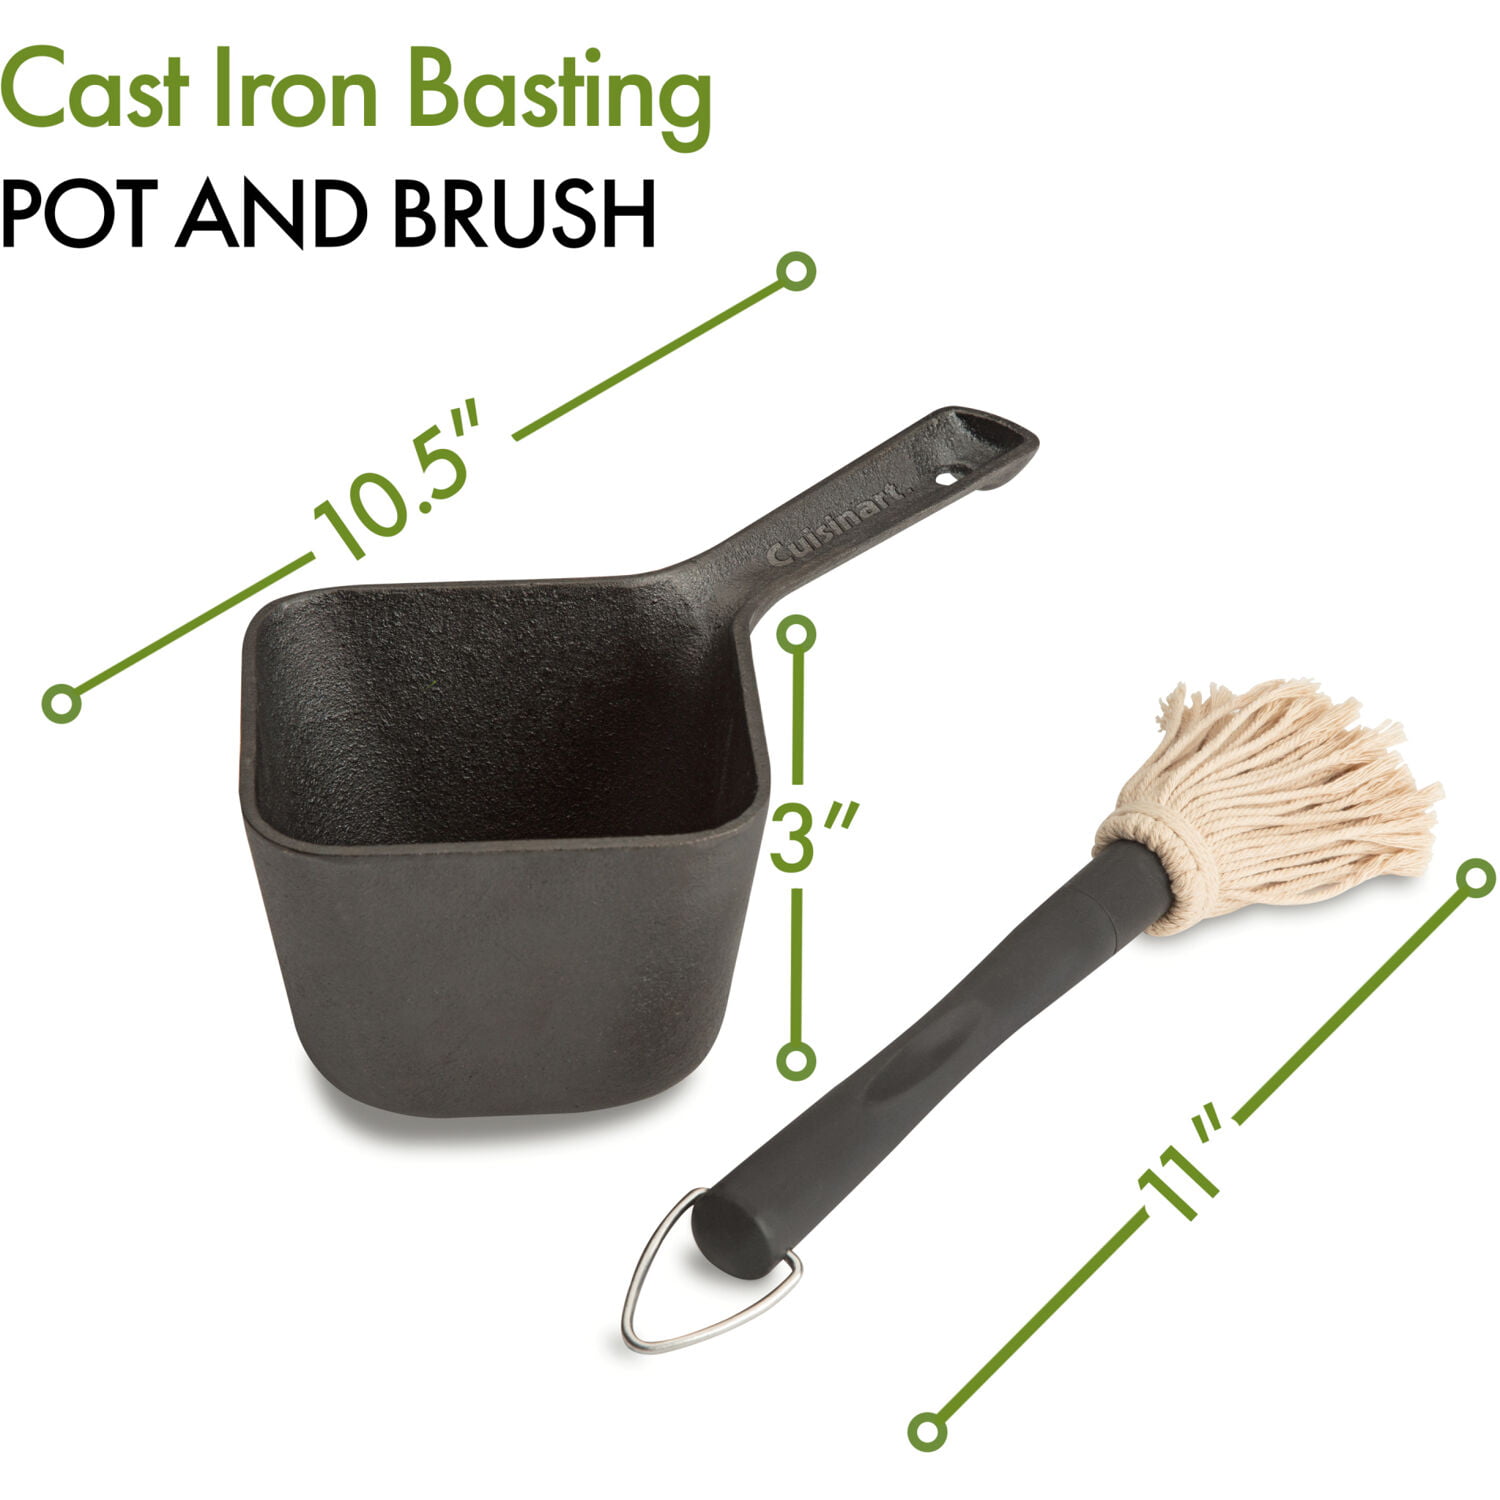 Grilling Basting Pot and Brush Set